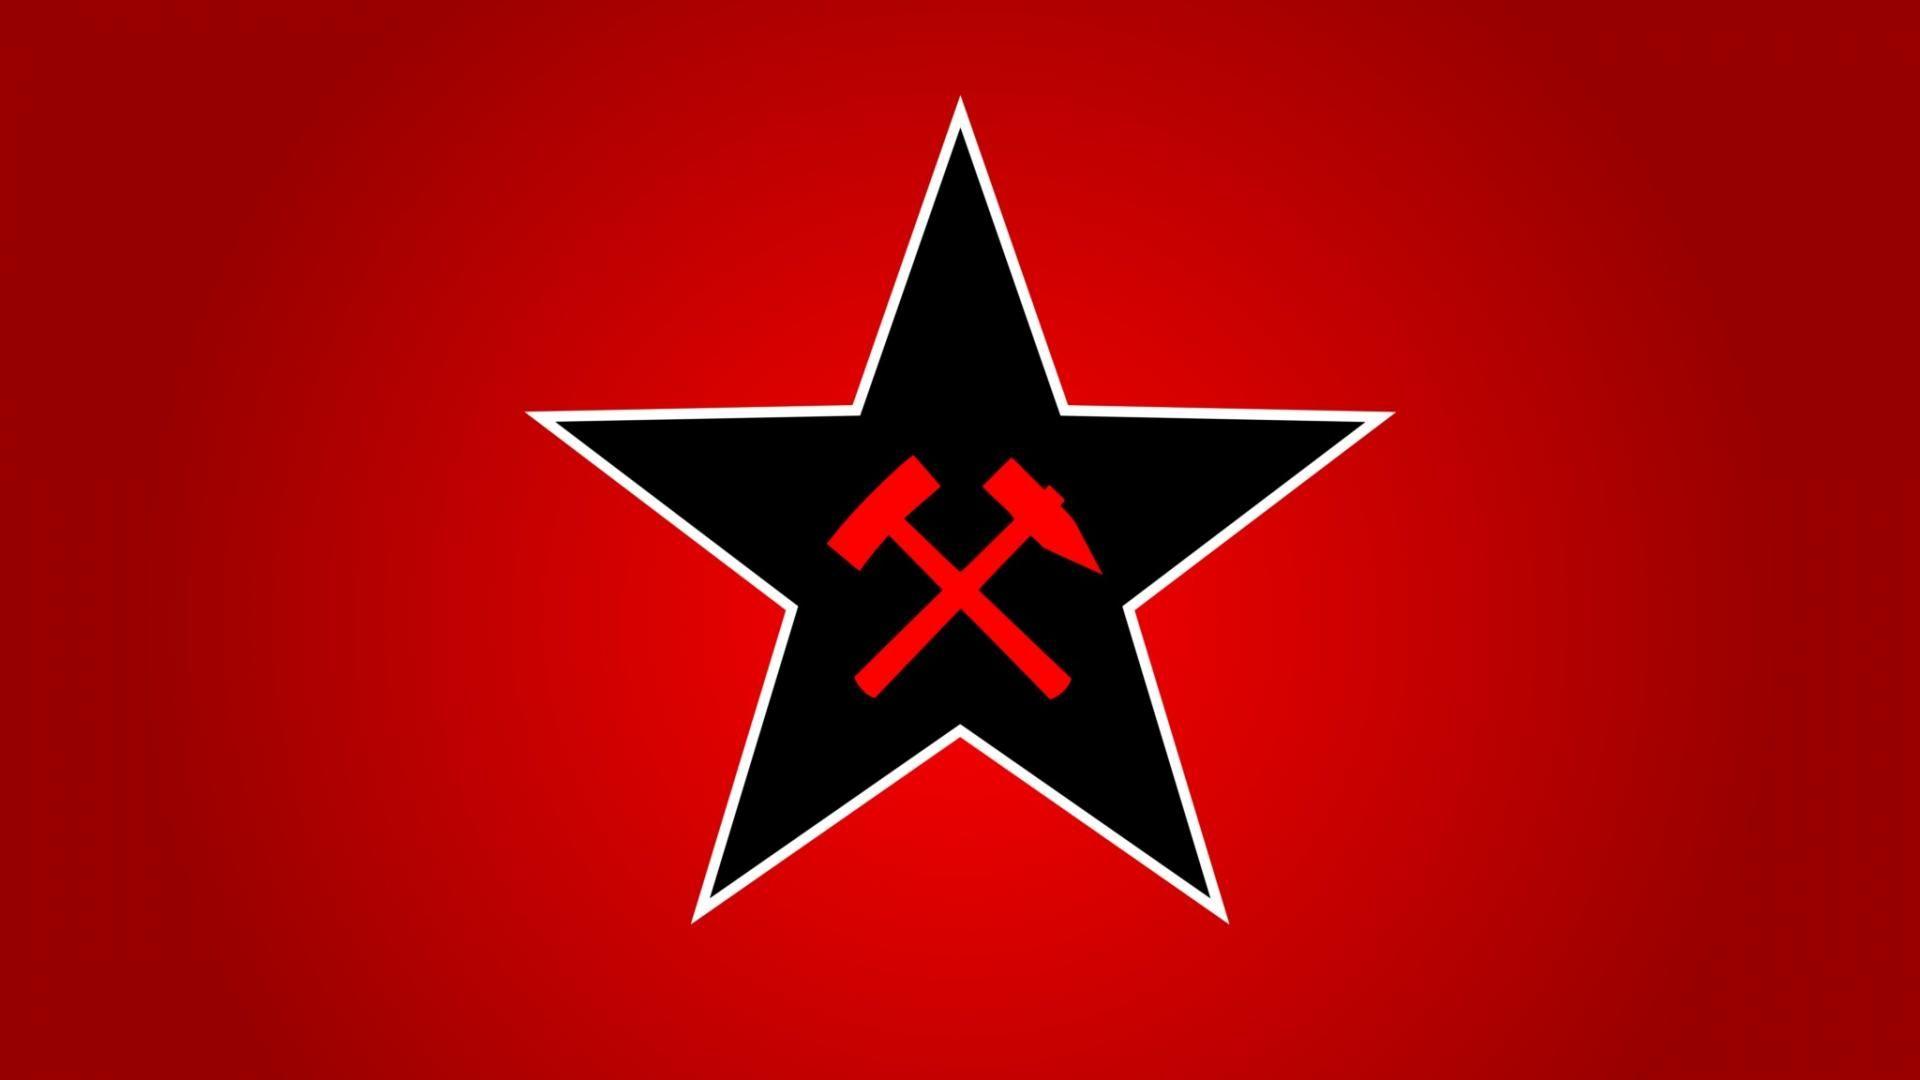 Freedom Revolution Anarchy Anarchism Mining Union Anarcho Communism